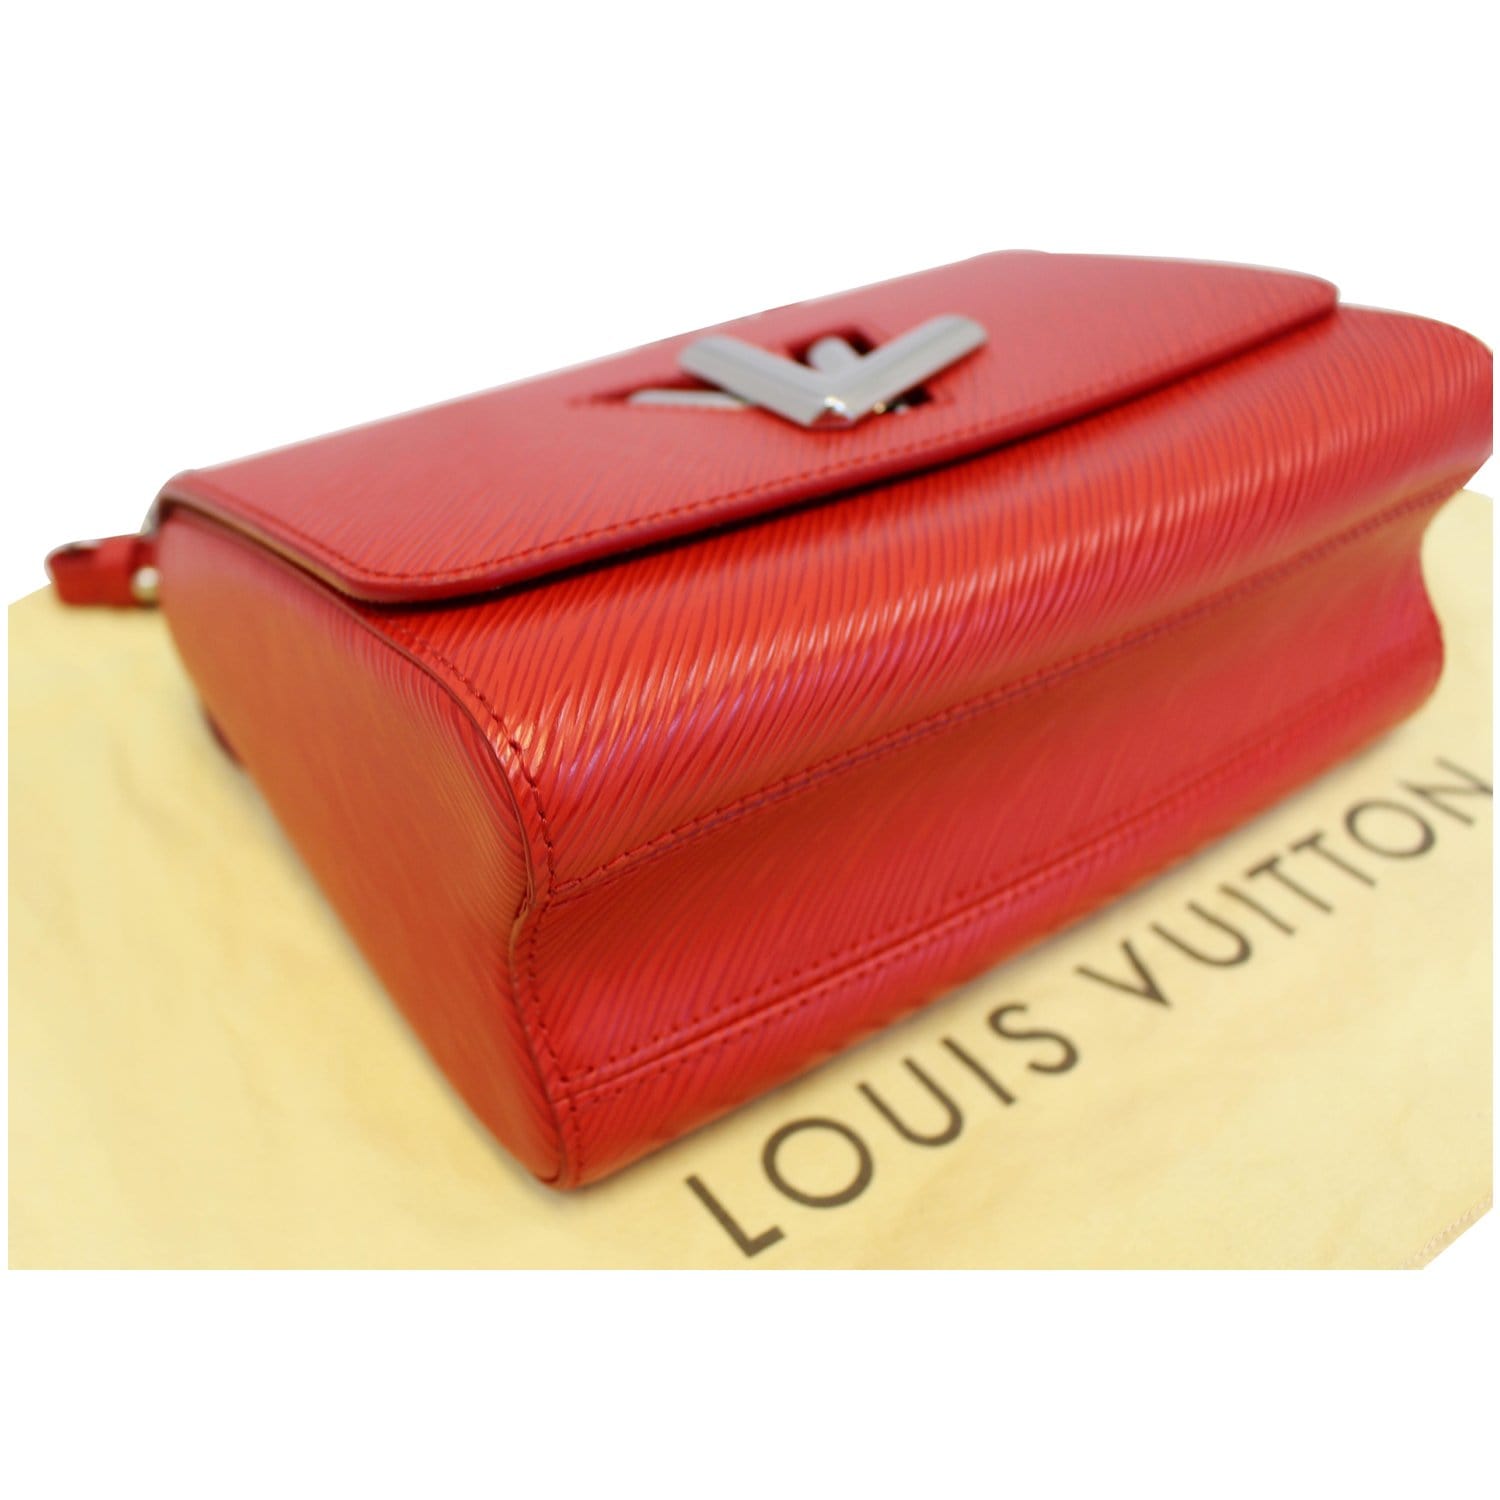 Twist MM Epi Leather - Women - Handbags